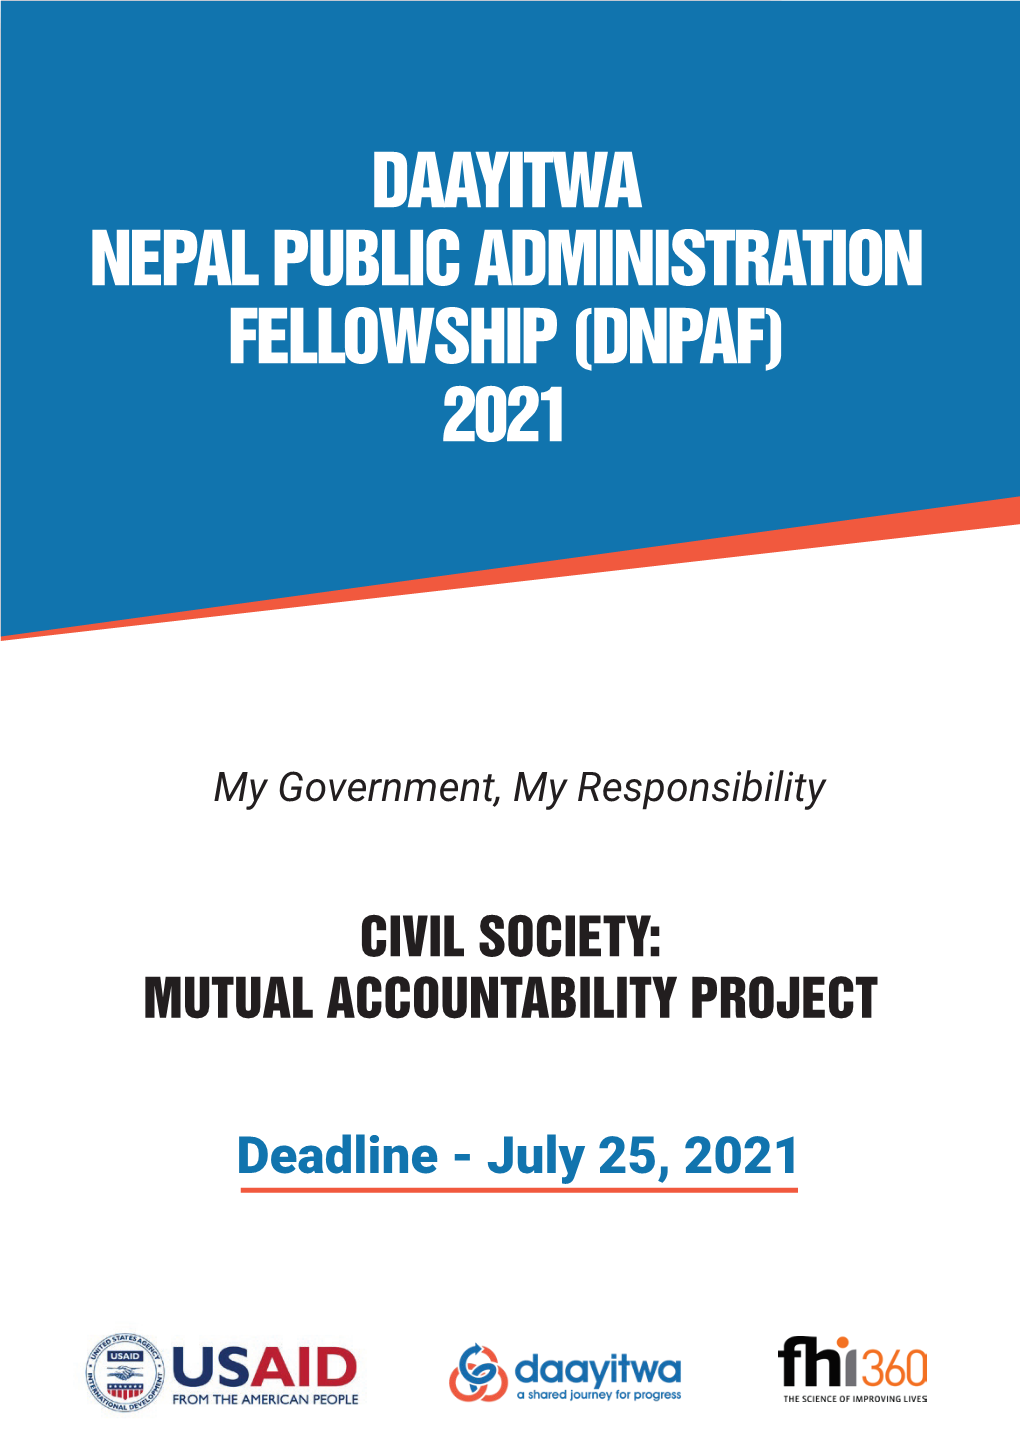 Daayitwa Nepal Public Administration Fellowship (Dnpaf) 2021